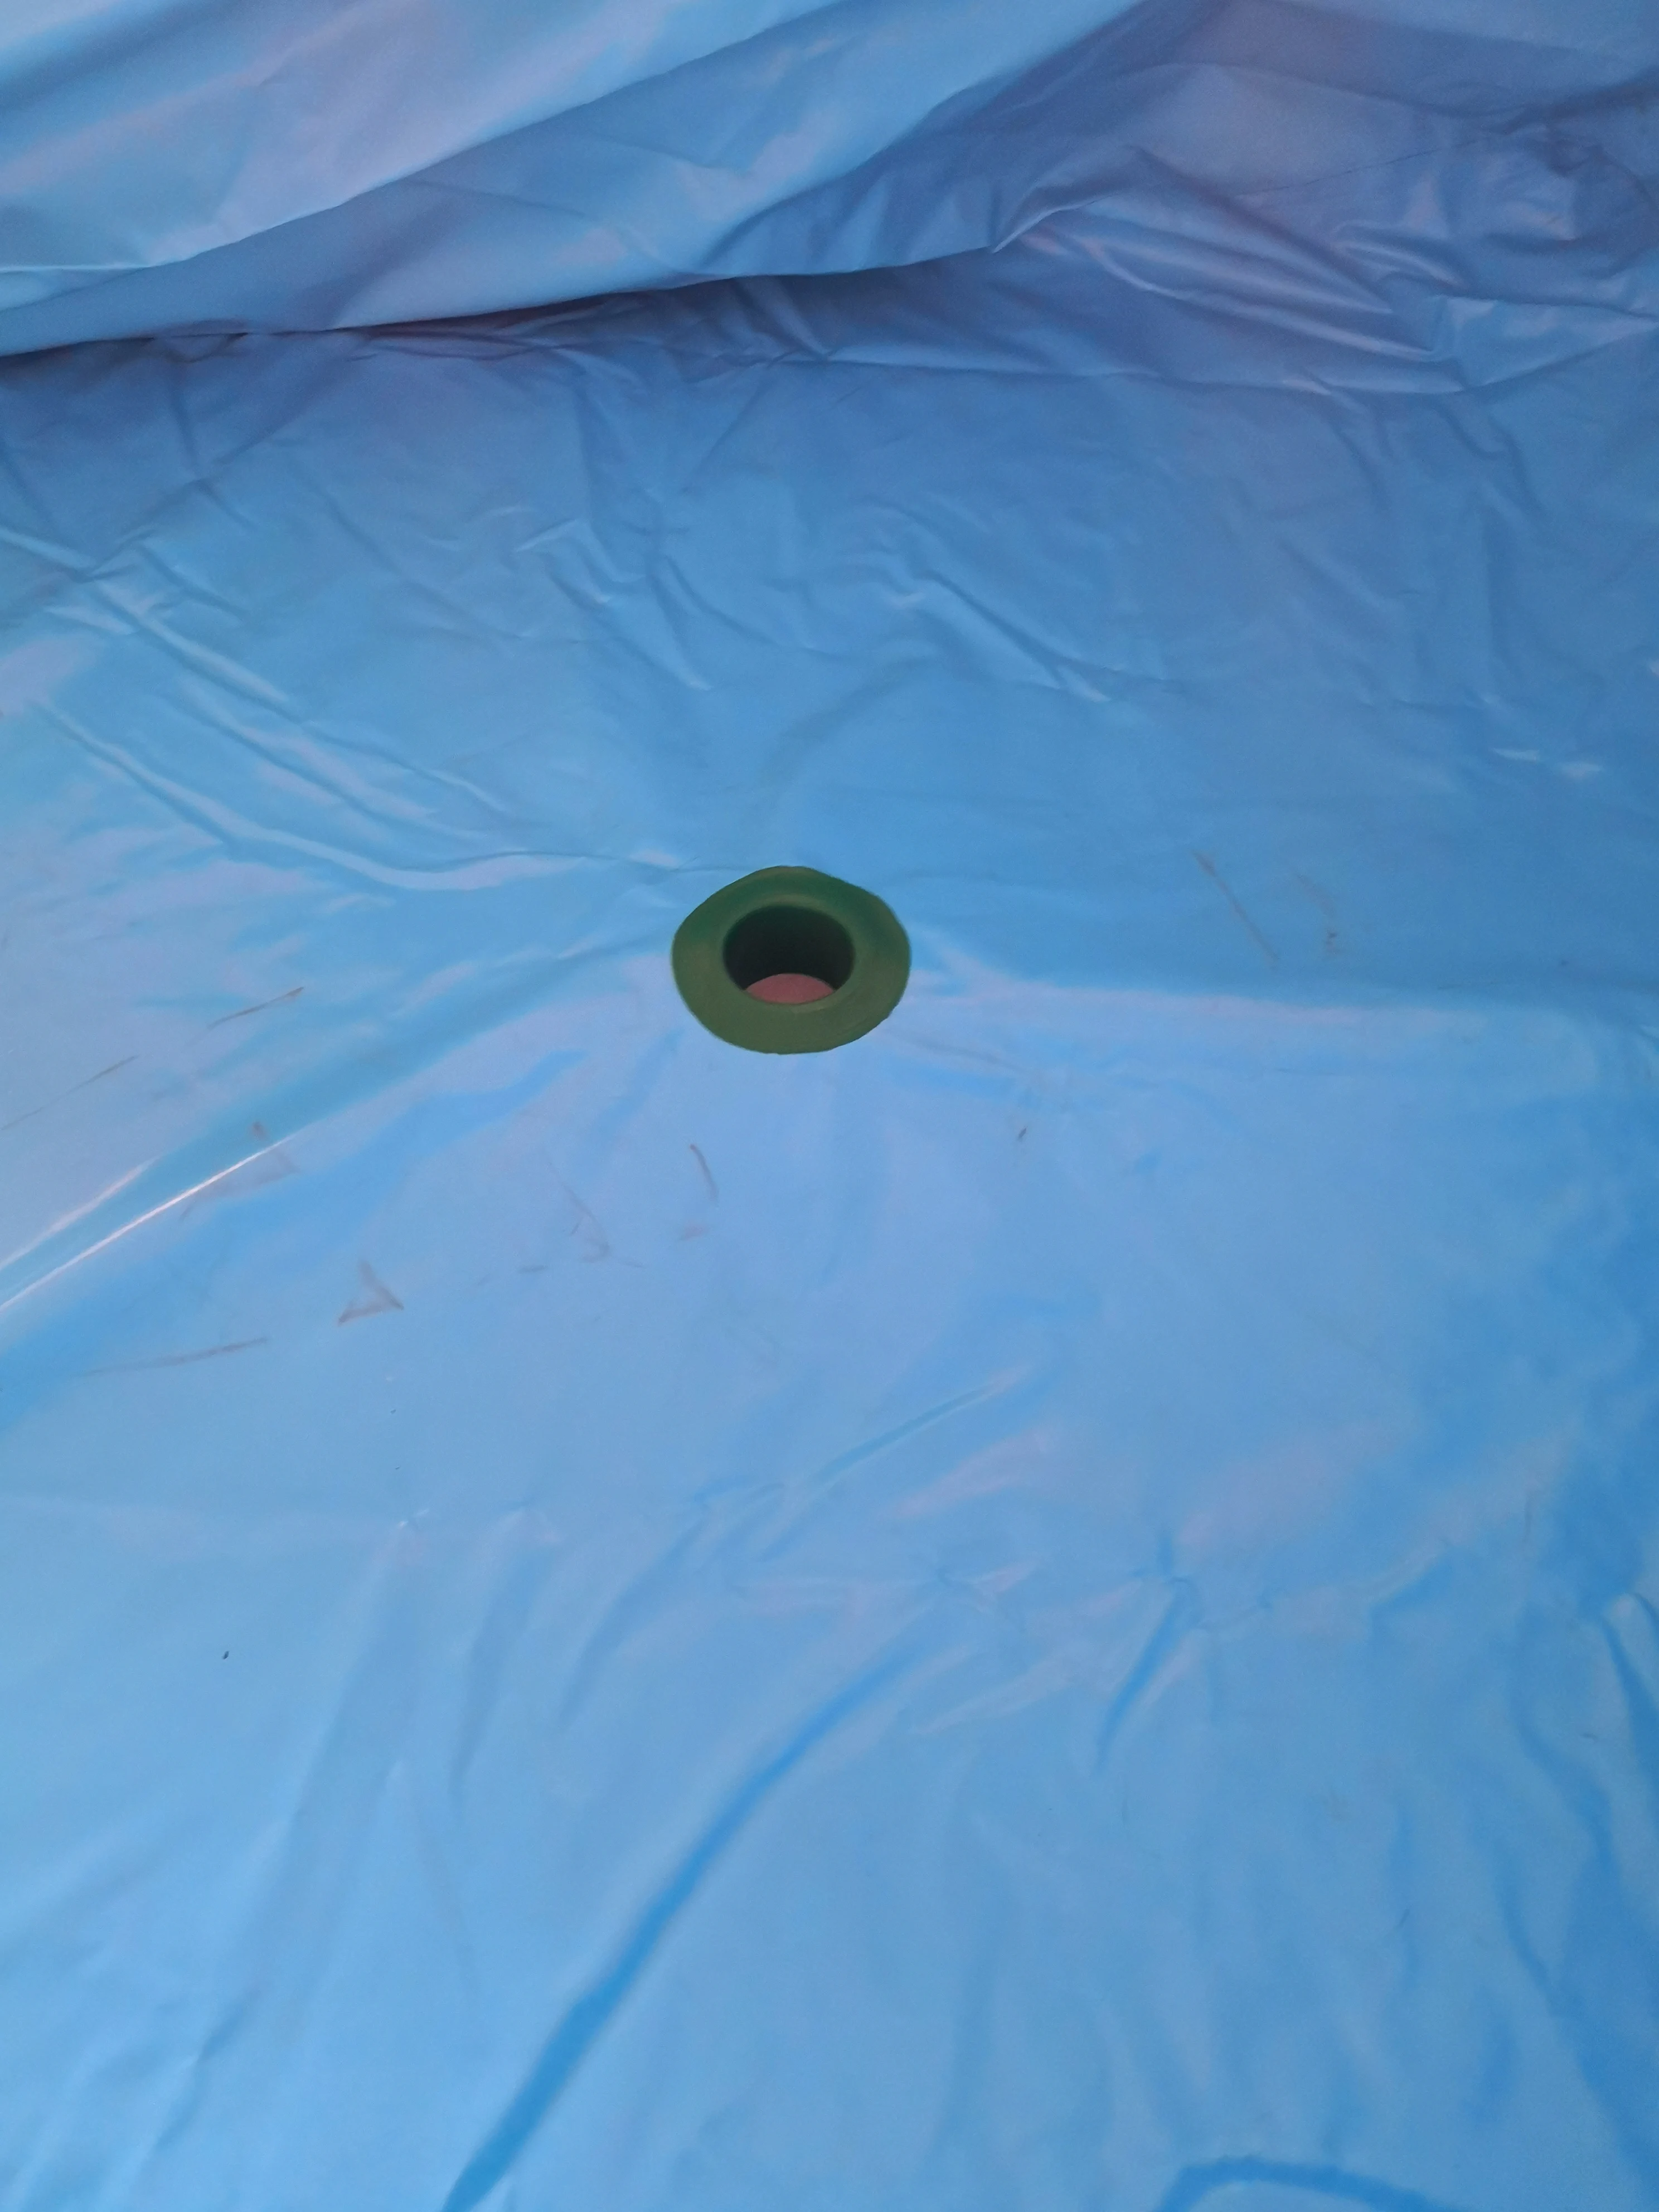 flexible and foldable pvc tarpaulin fish tank fish pond water tank pvc tarpaulin for swimming pool